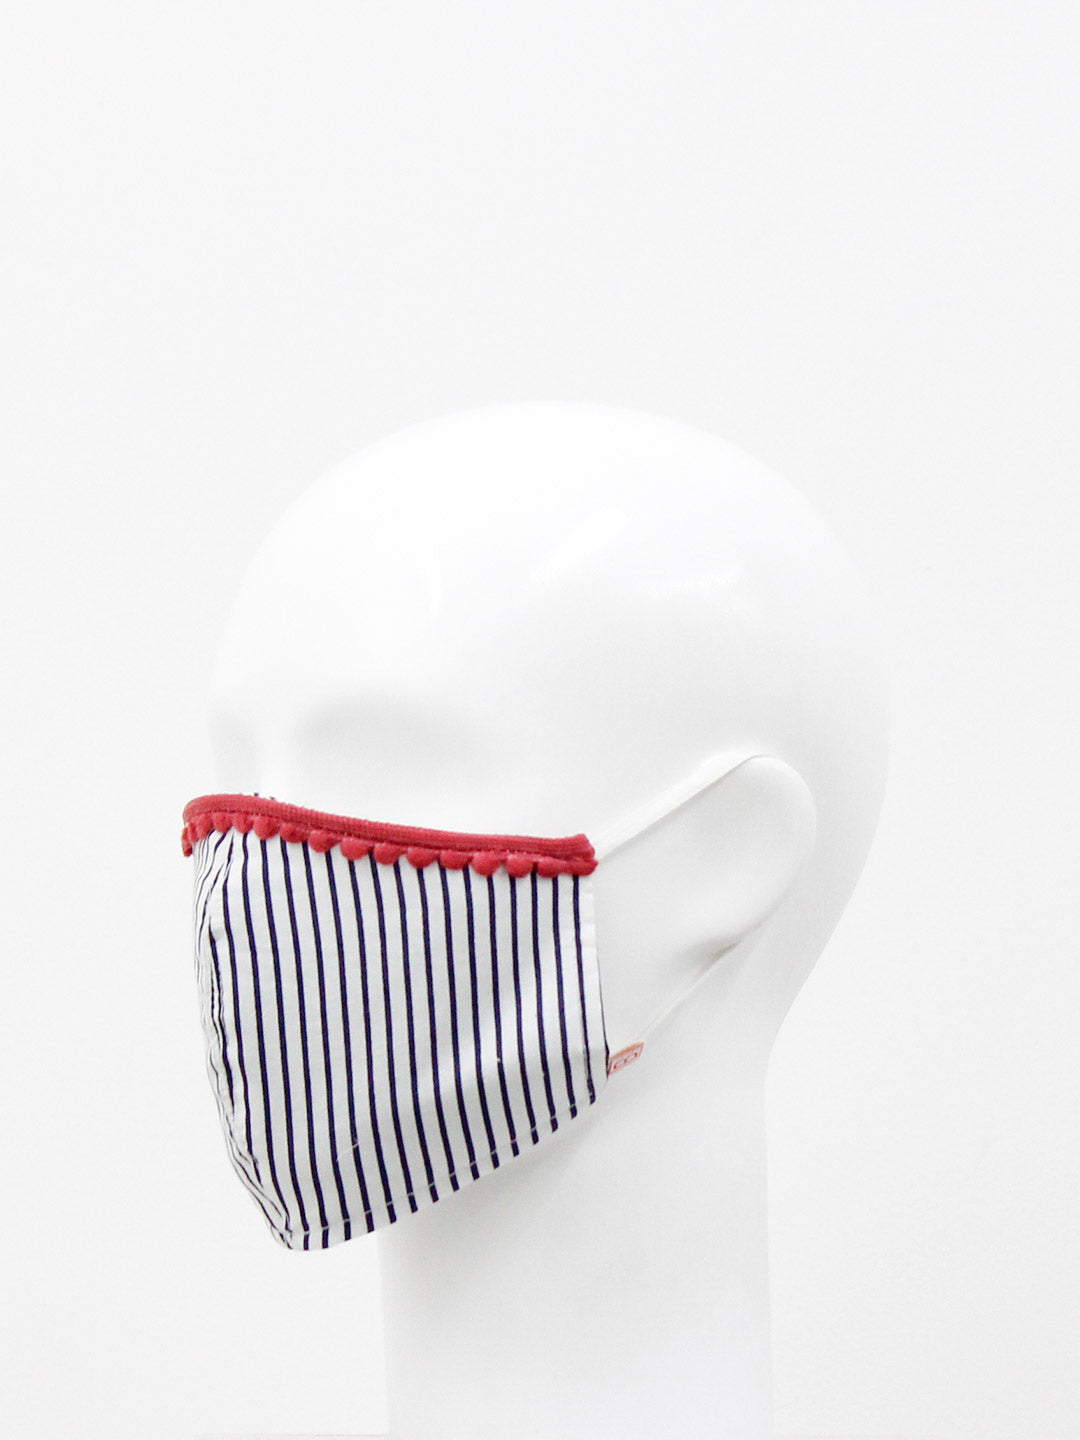 Stripe Lace Mask- set of 2